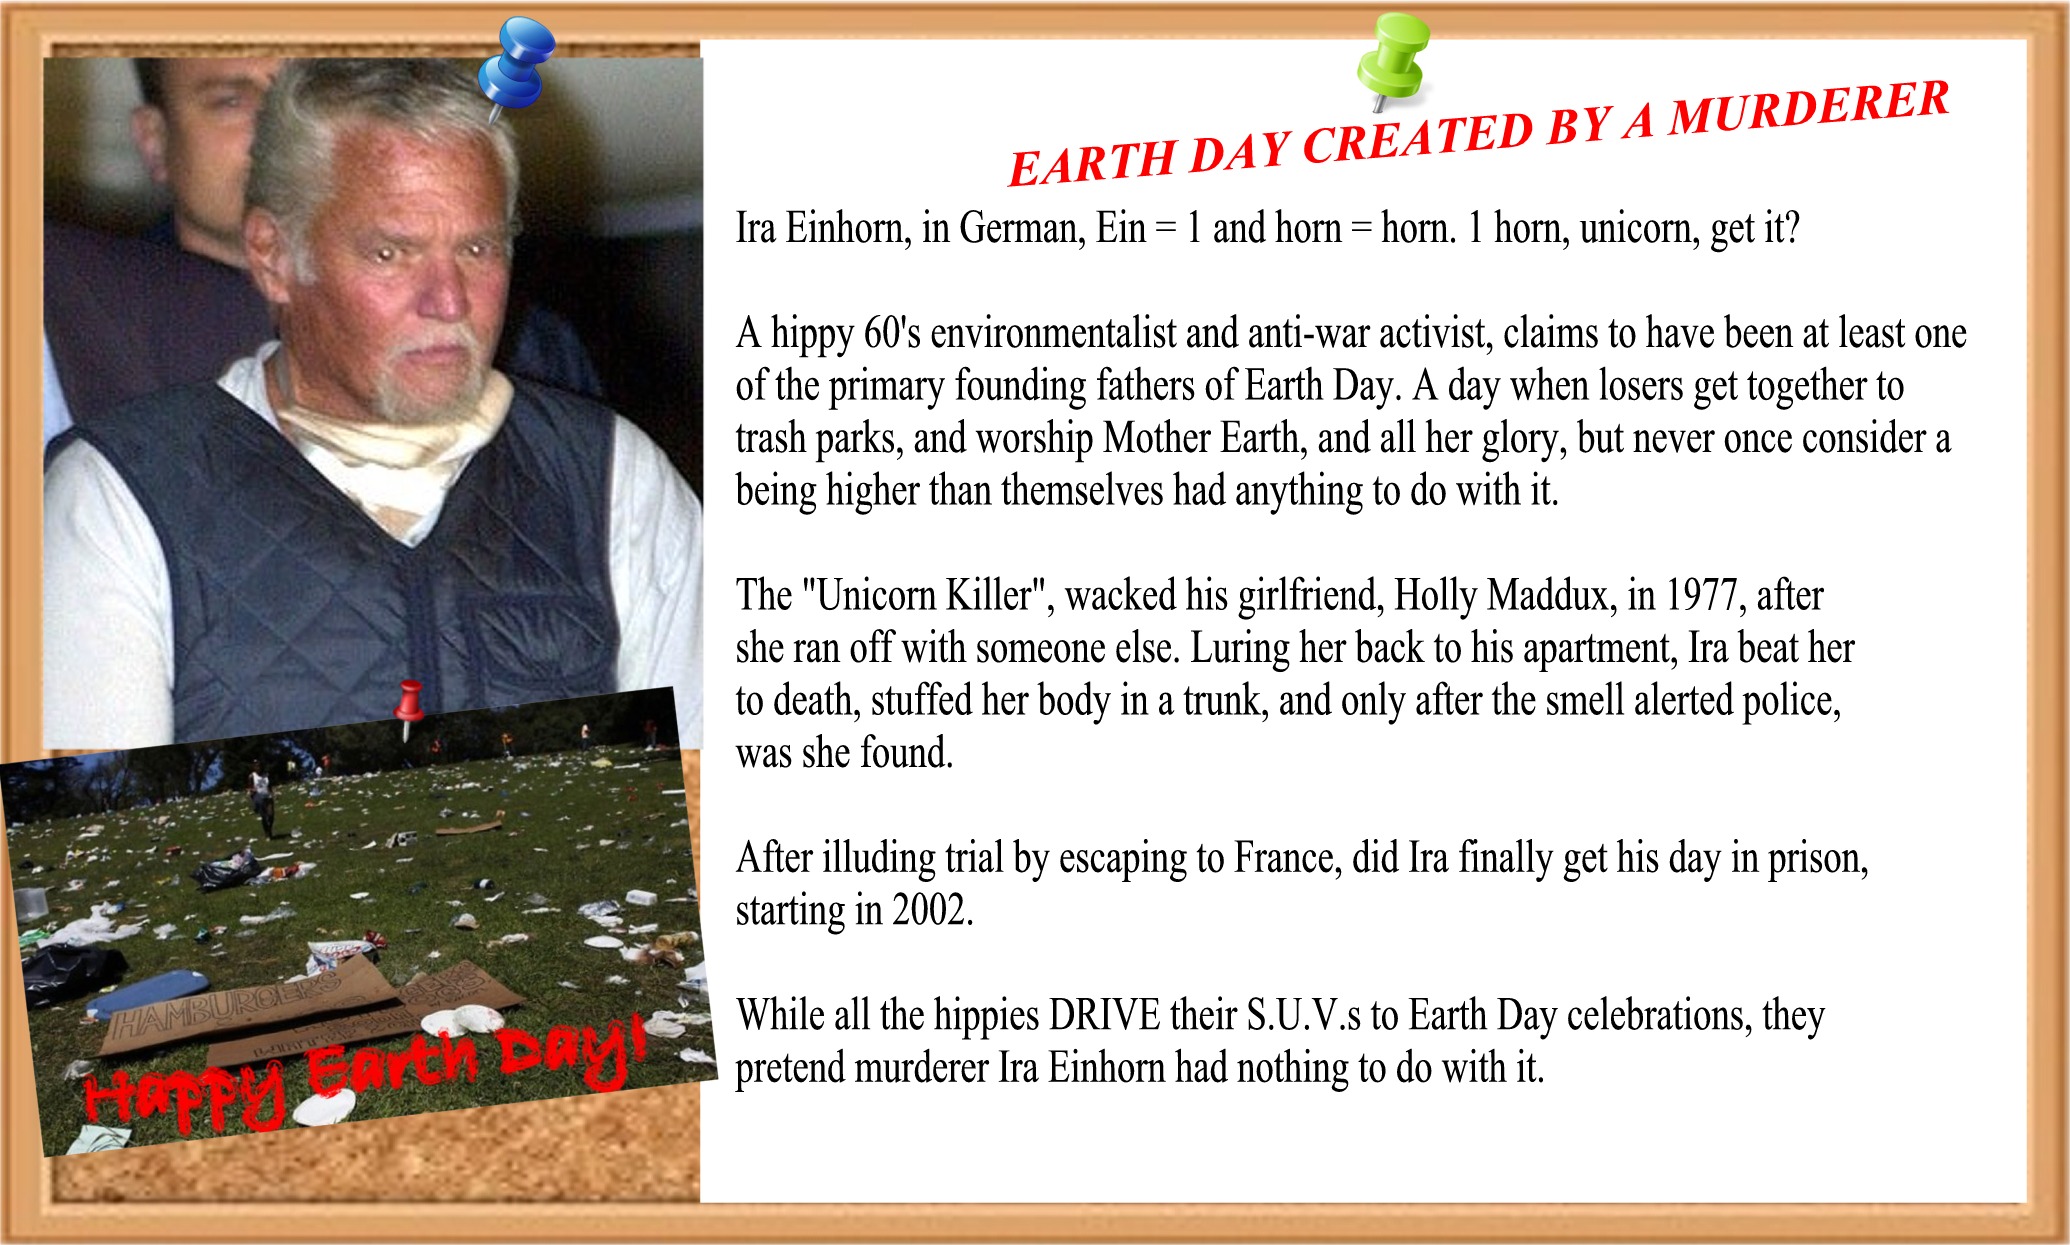 Happy Earth Day murder lovers!